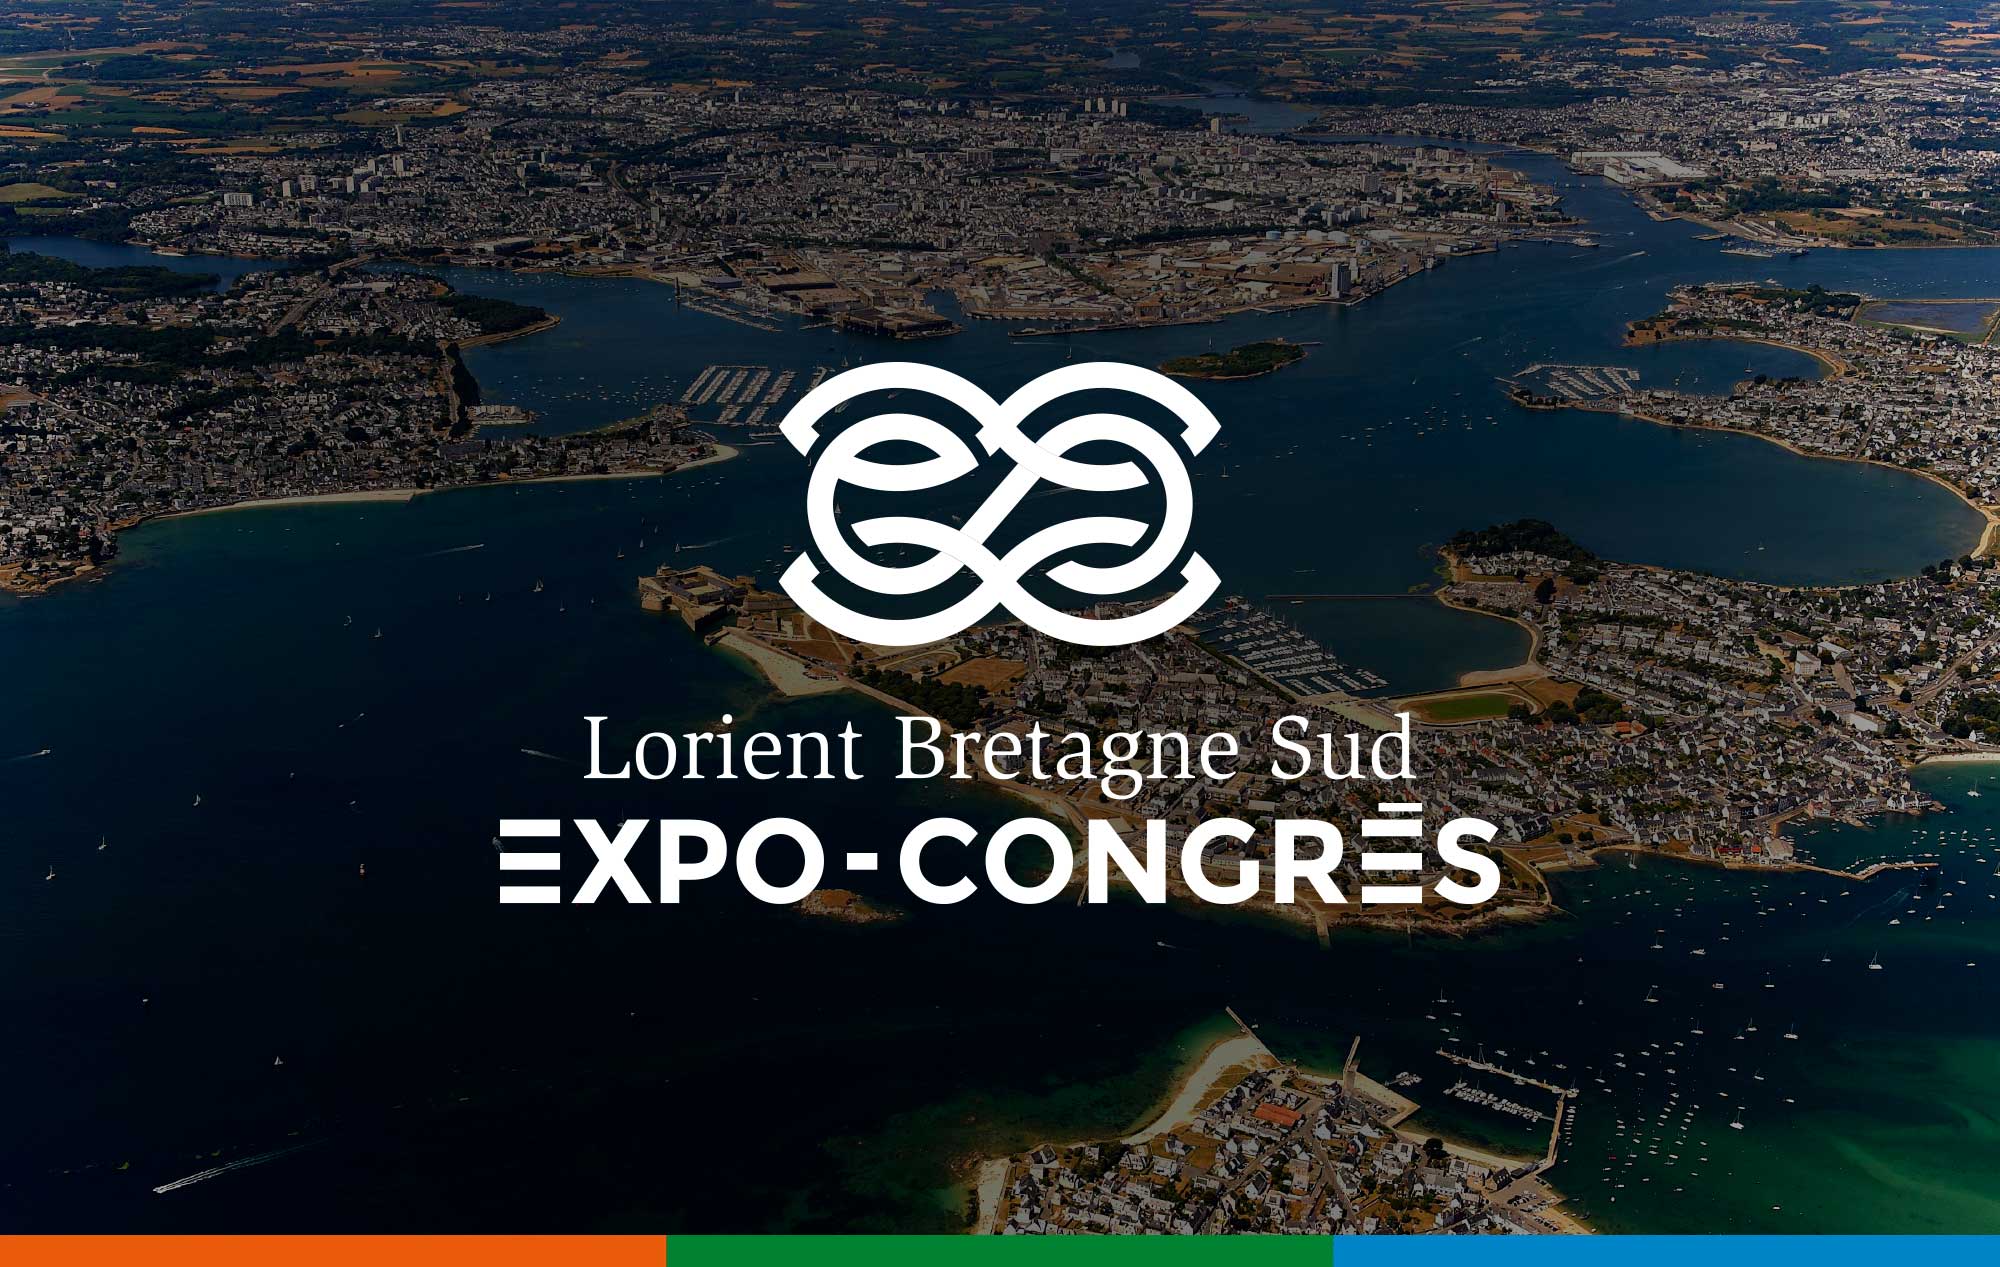 lorient bretagne sud Expo-Congrès logo